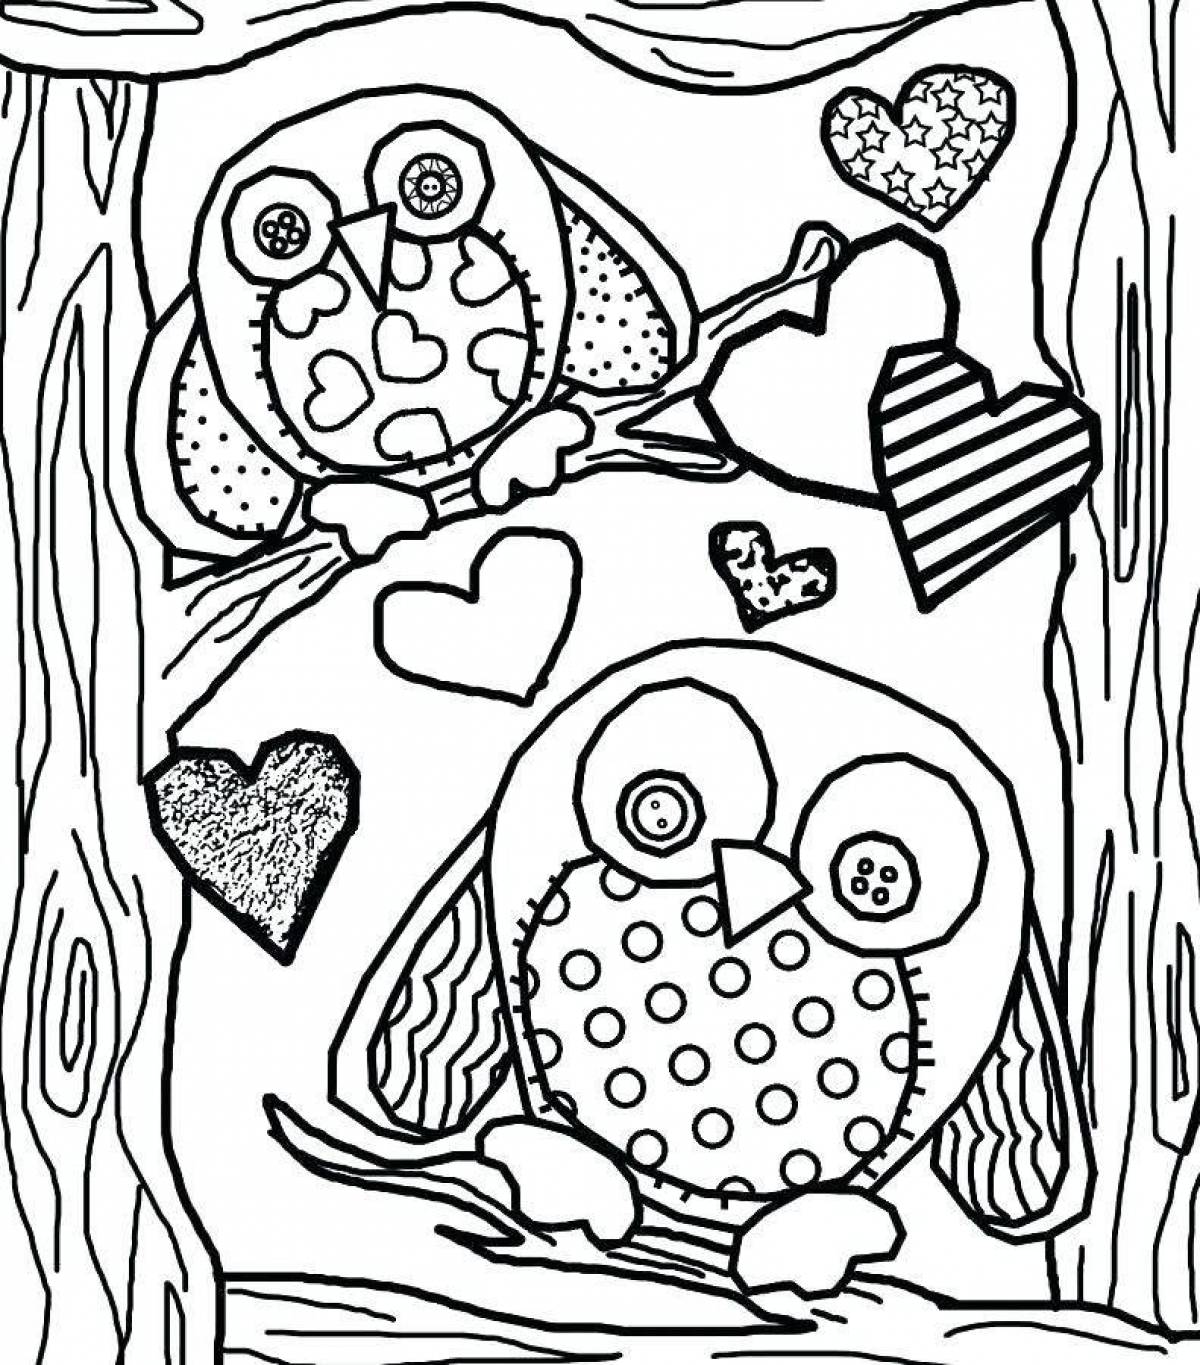 Exquisite owl coloring book